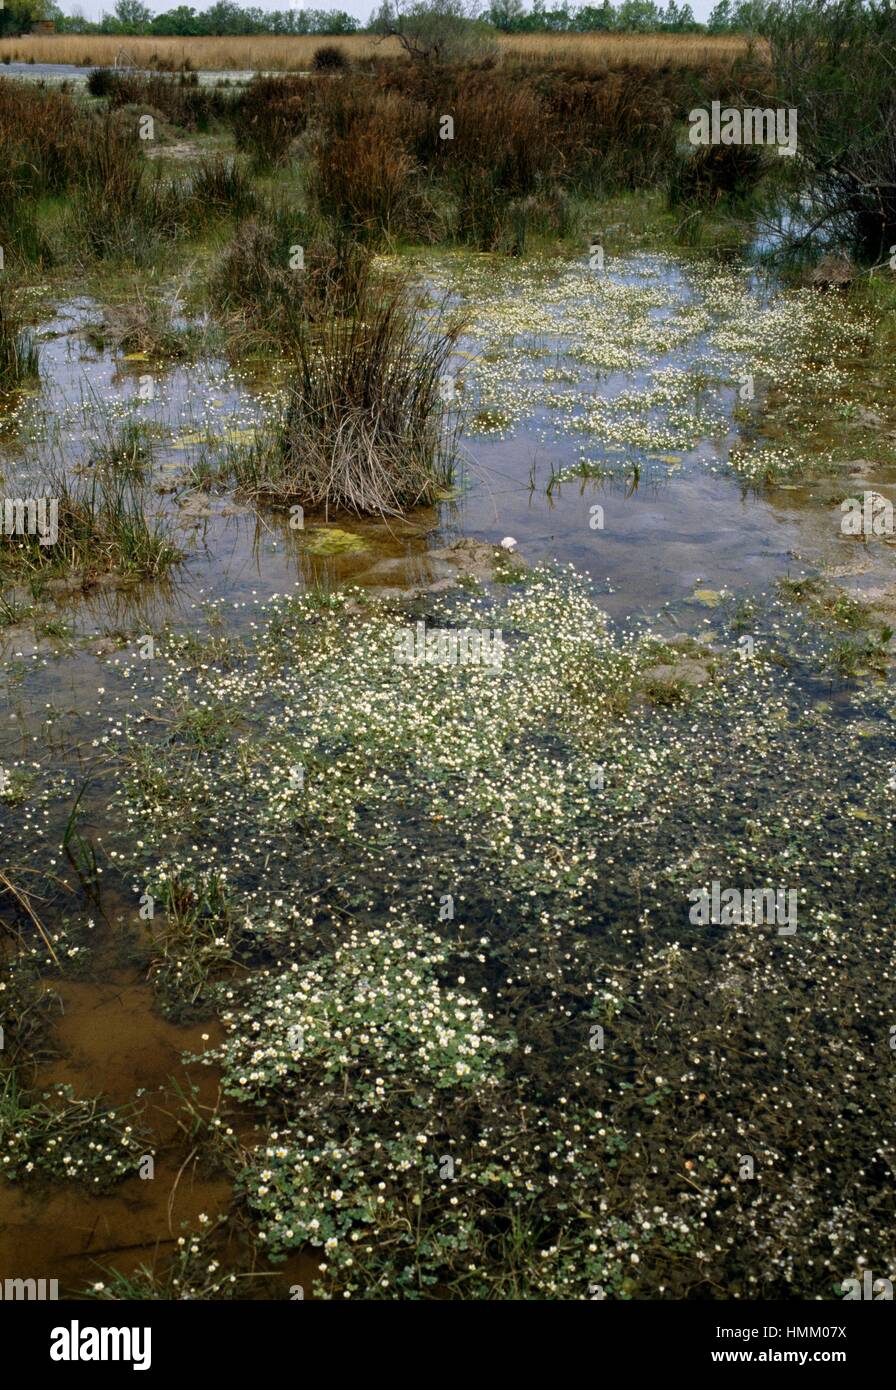 Acqua comune-stella o Acqua Bianca-stella (Ranunculus aquatilis), Ranunculaceae e bandiera gialla, Iris gialla o acqua bandiera (Iris pseudacorus), Iridaceae, Camargue, Francia. Foto Stock